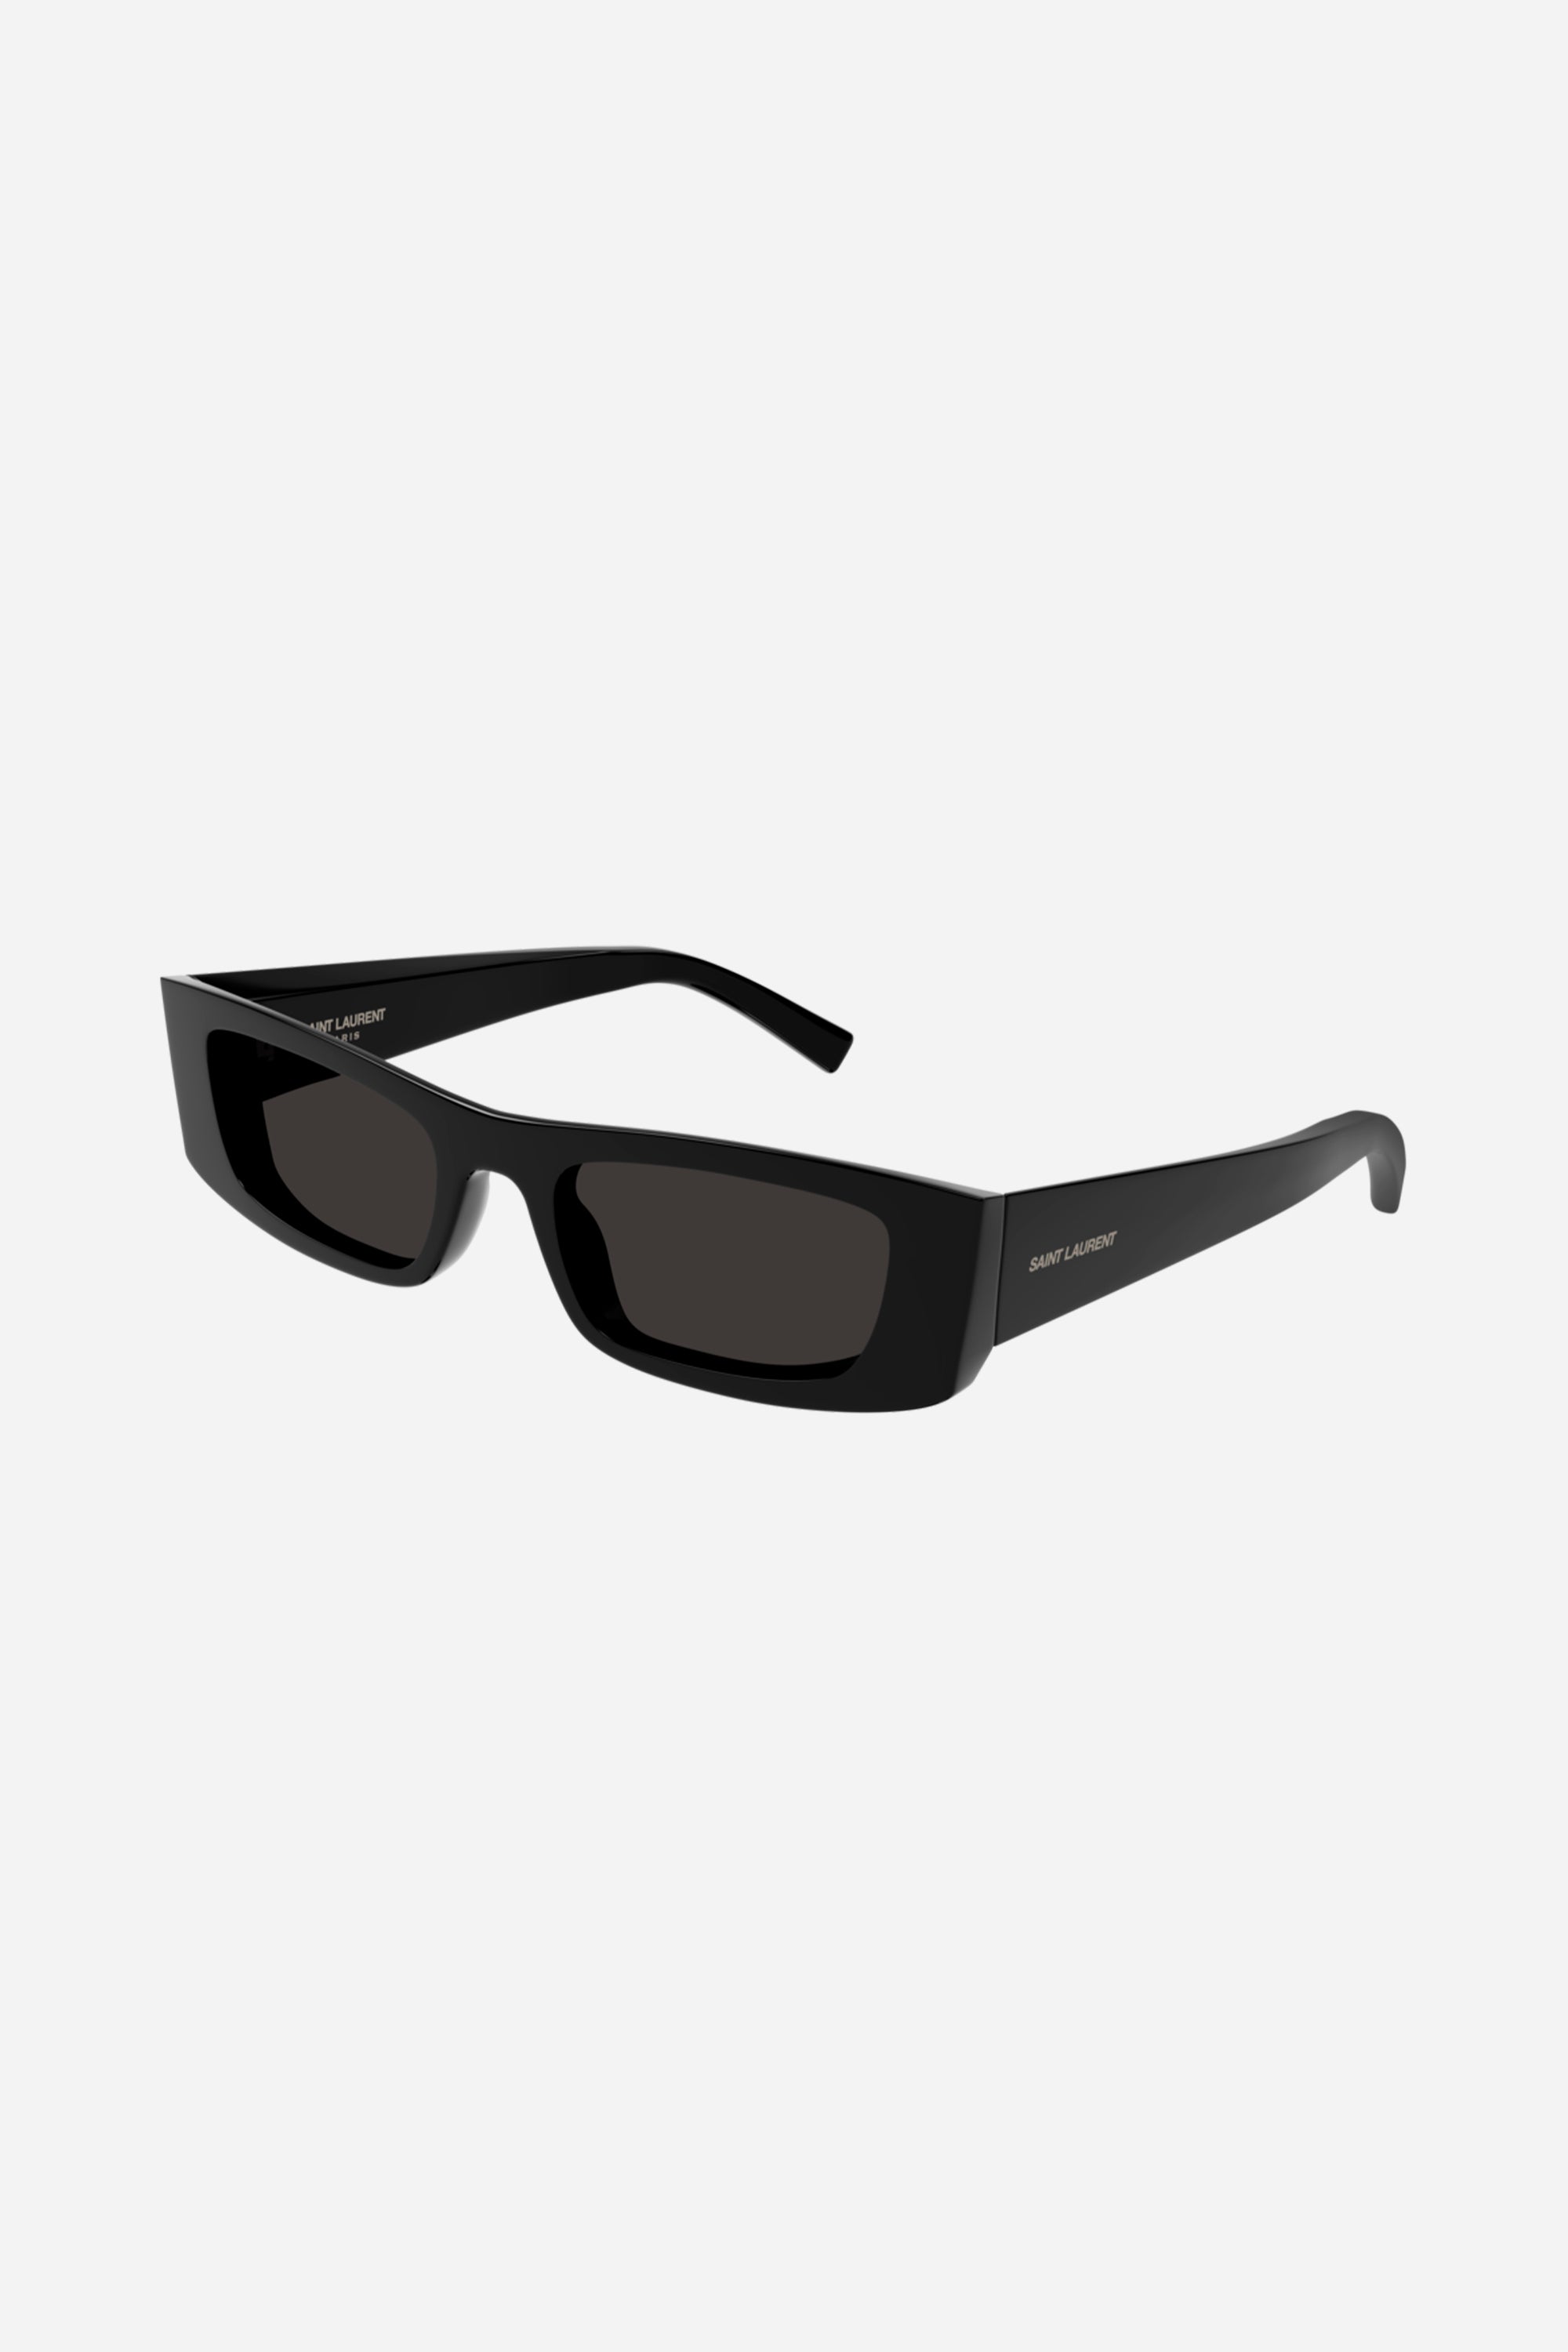 Saint Laurent rectangular black sunglasses - Eyewear Club